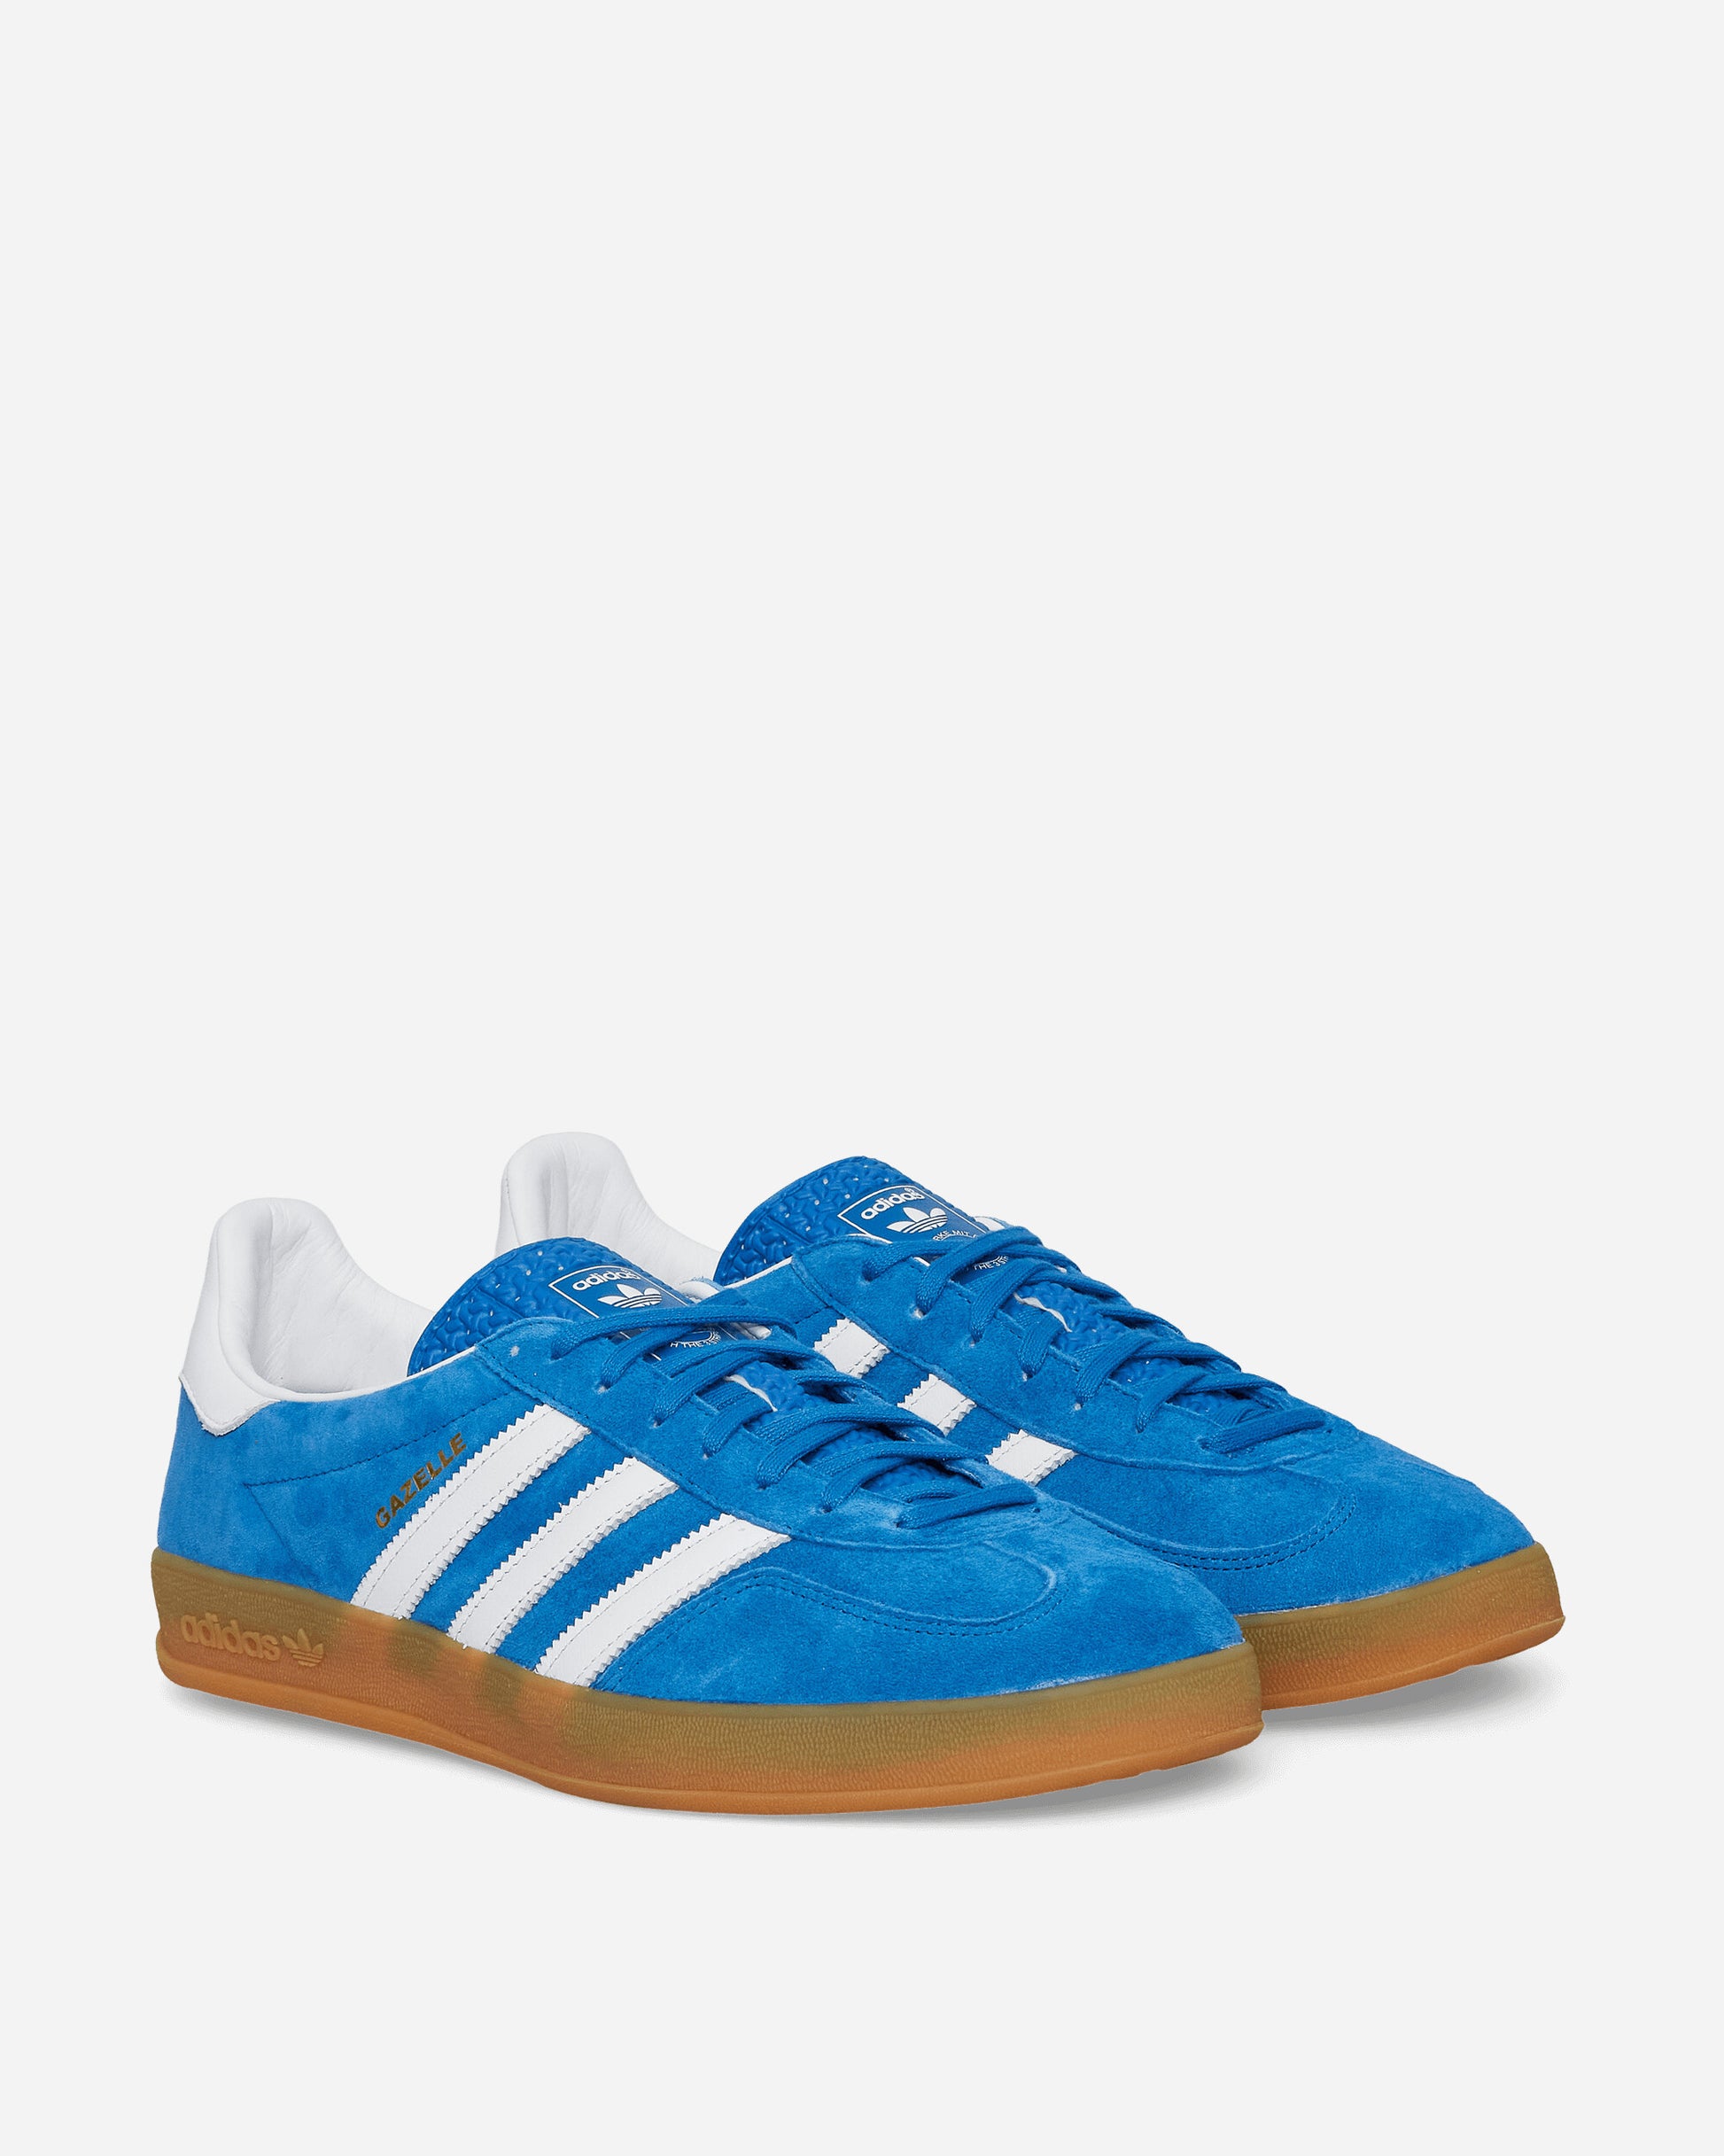 adidas Gazelle Indoor Bluebird/Ftwr White Sneakers Low H06260 001